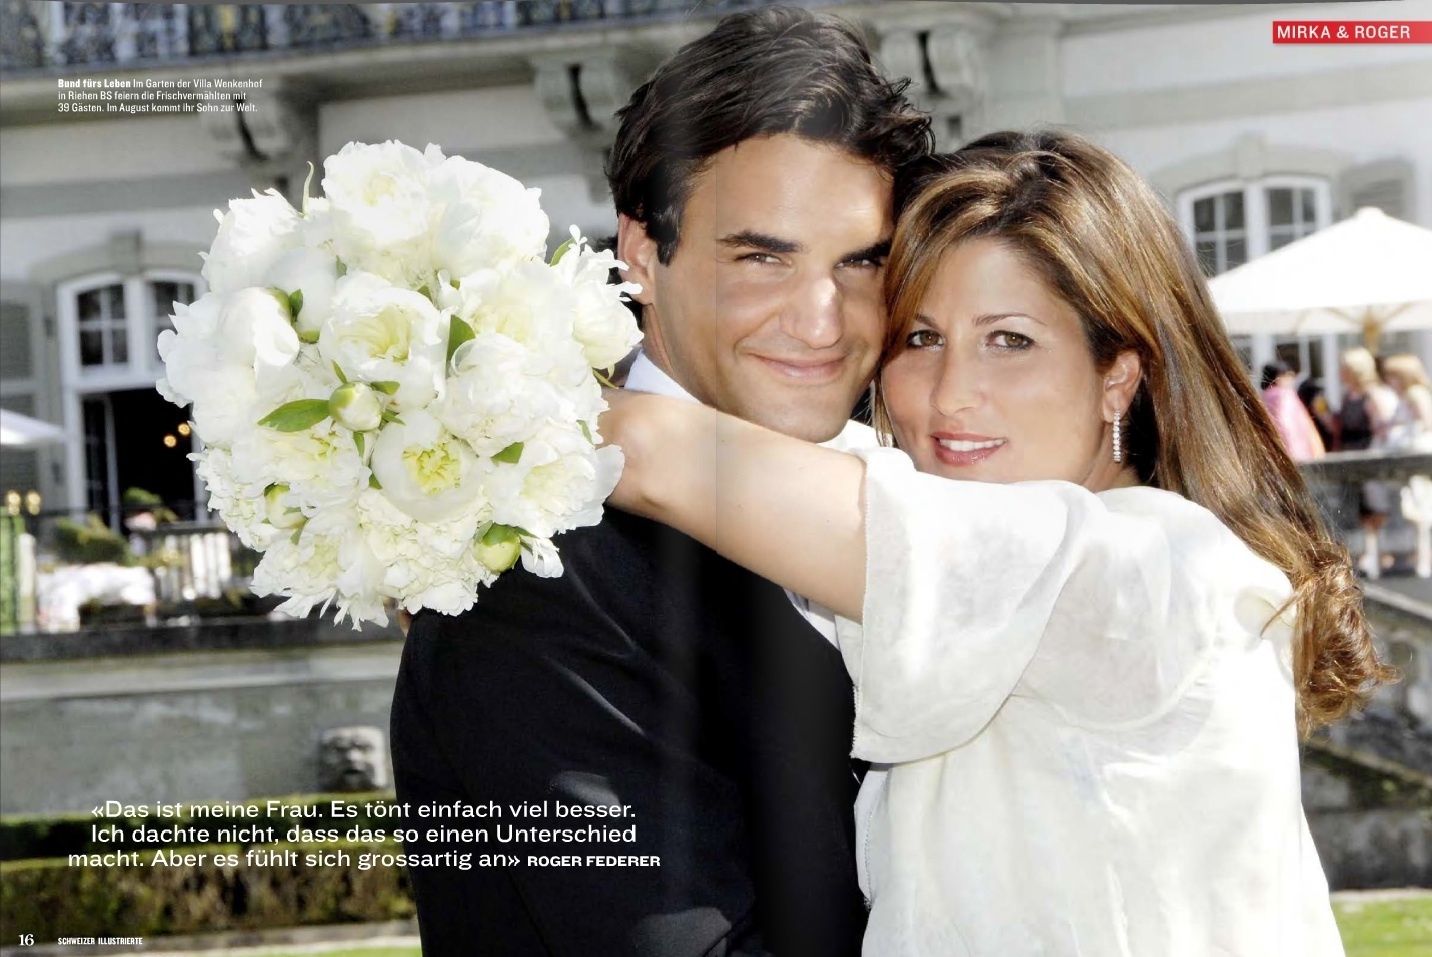 Roger Federer's Wedding - Roger Federer Photo (8165227) - Fanpop1432 x 957